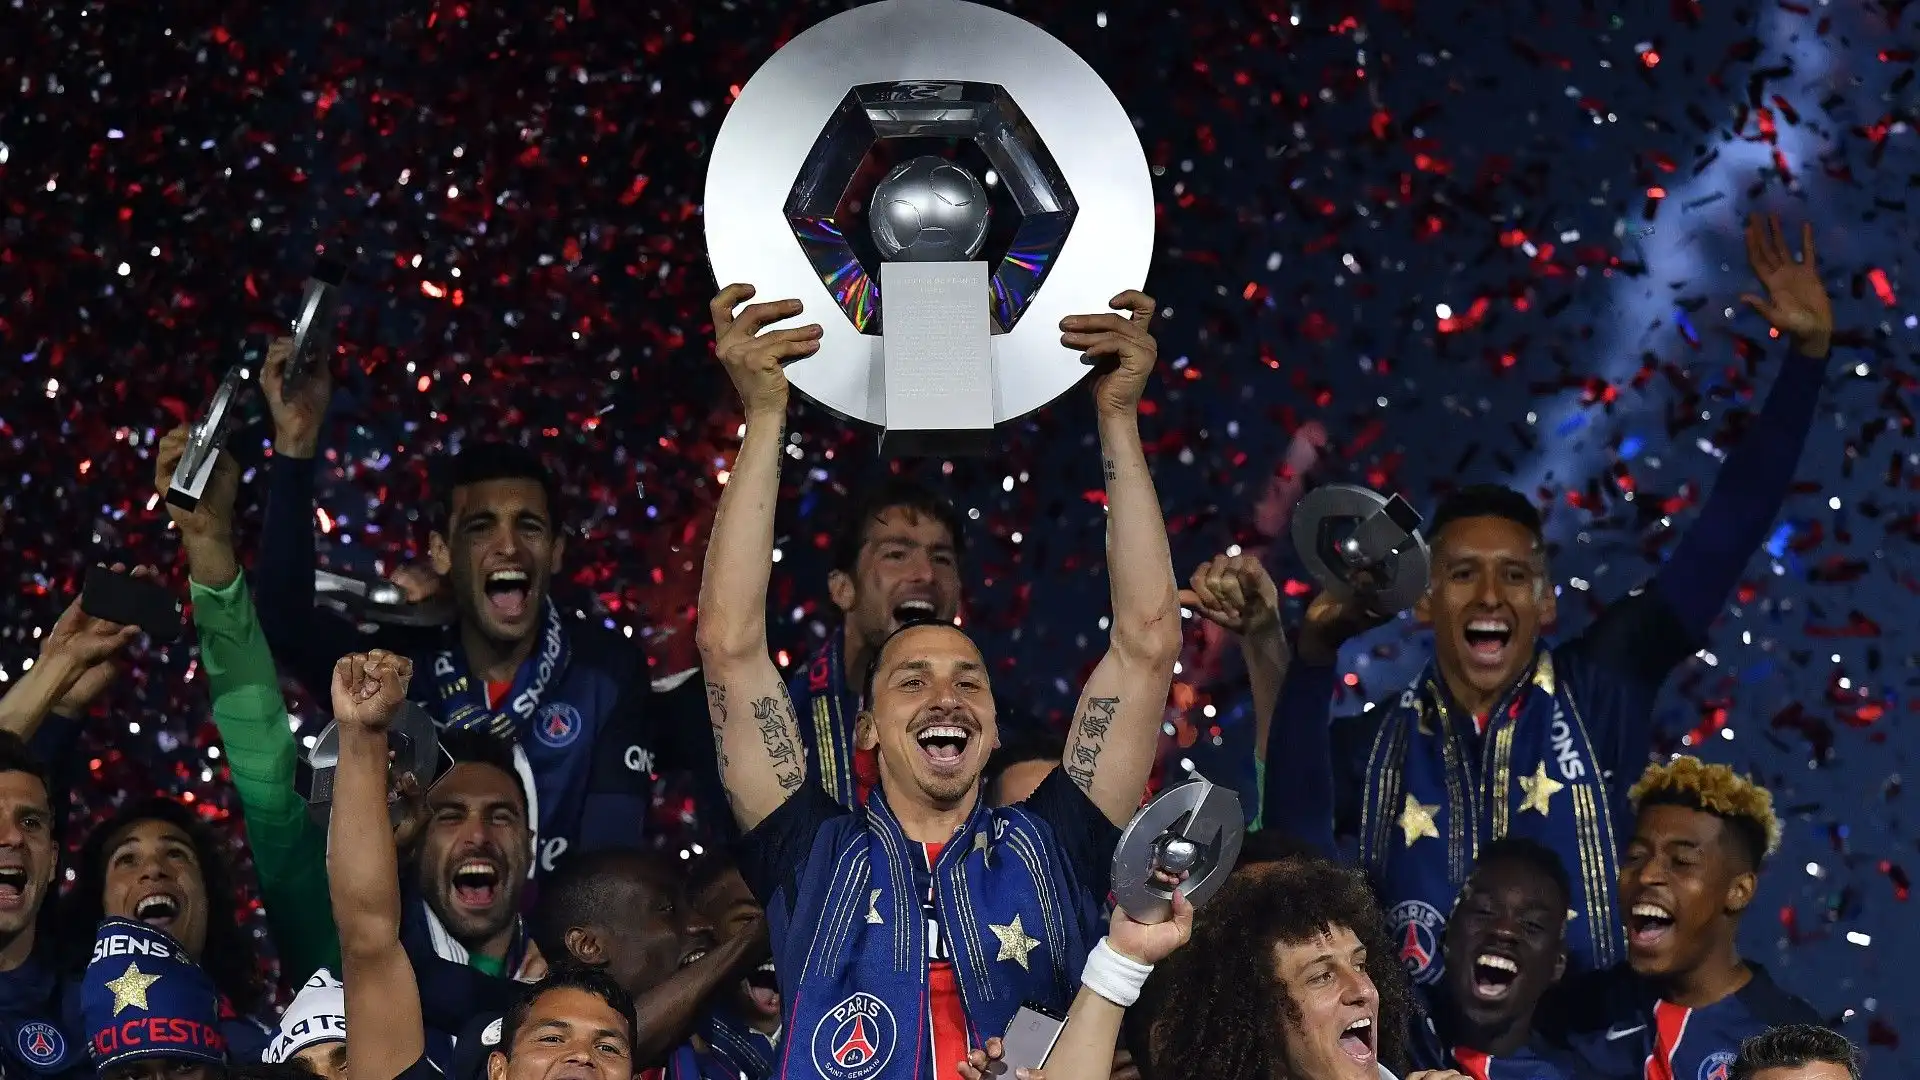 Campionato francese: 4 (Paris Saint-Germain: 2012-2013, 2013-2014, 2014-2015, 2015-2016)